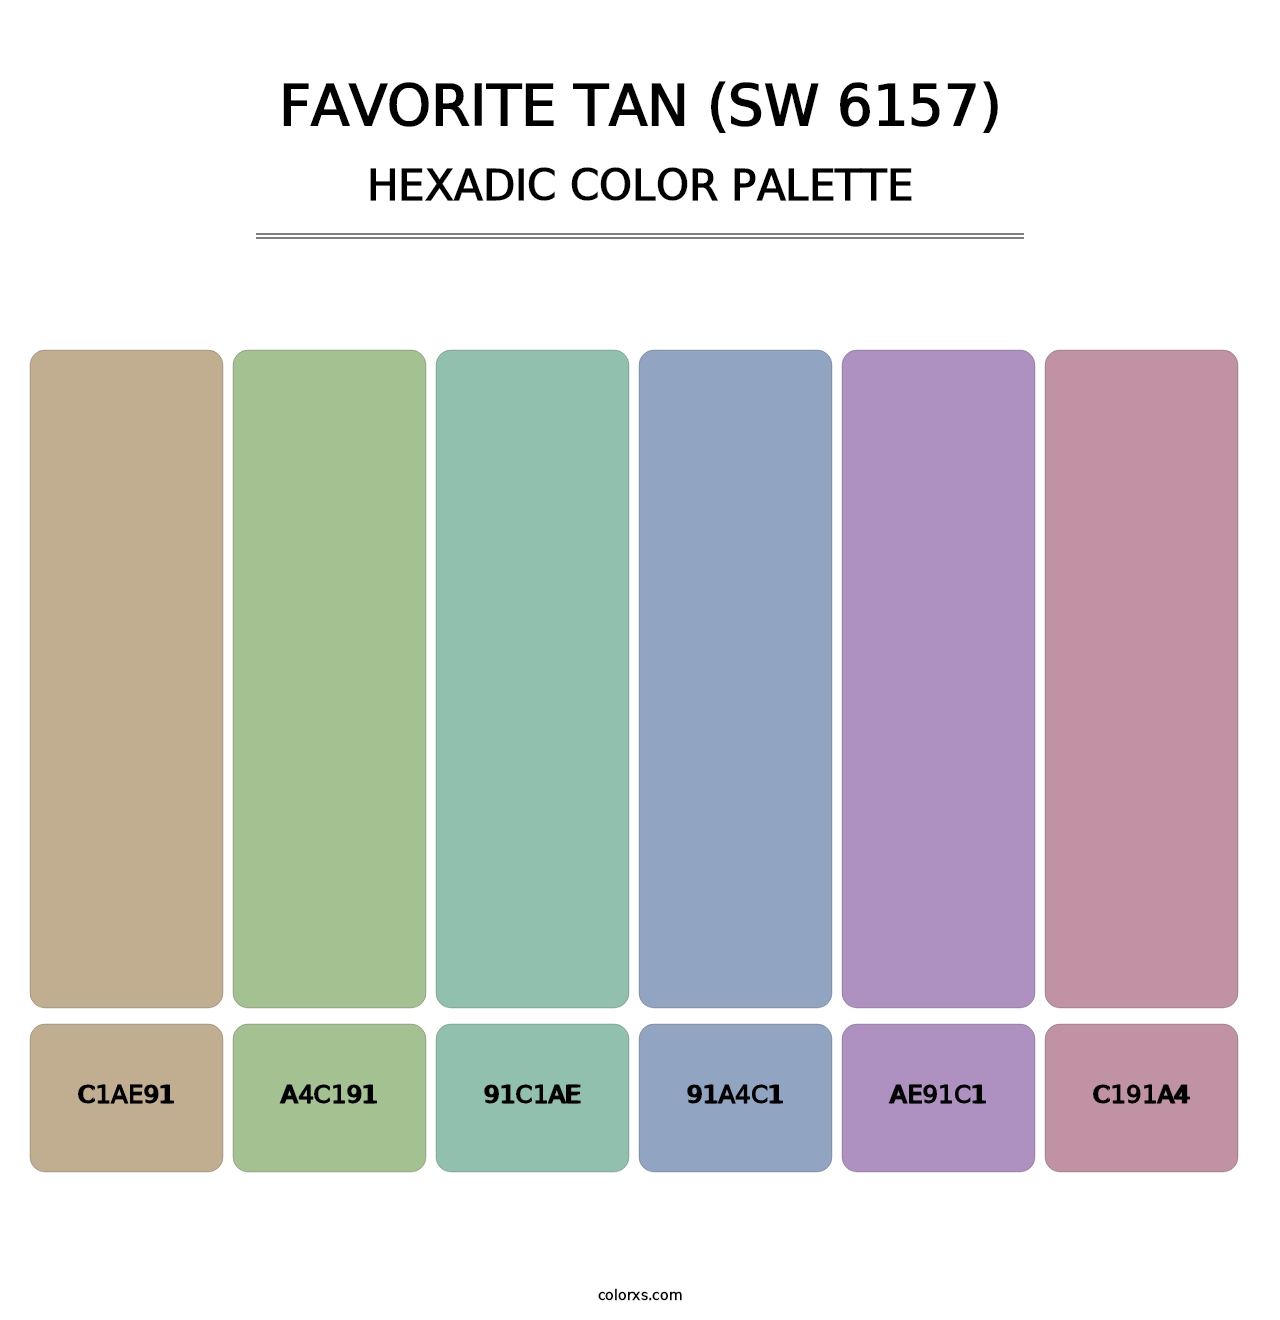 Favorite Tan (SW 6157) - Hexadic Color Palette